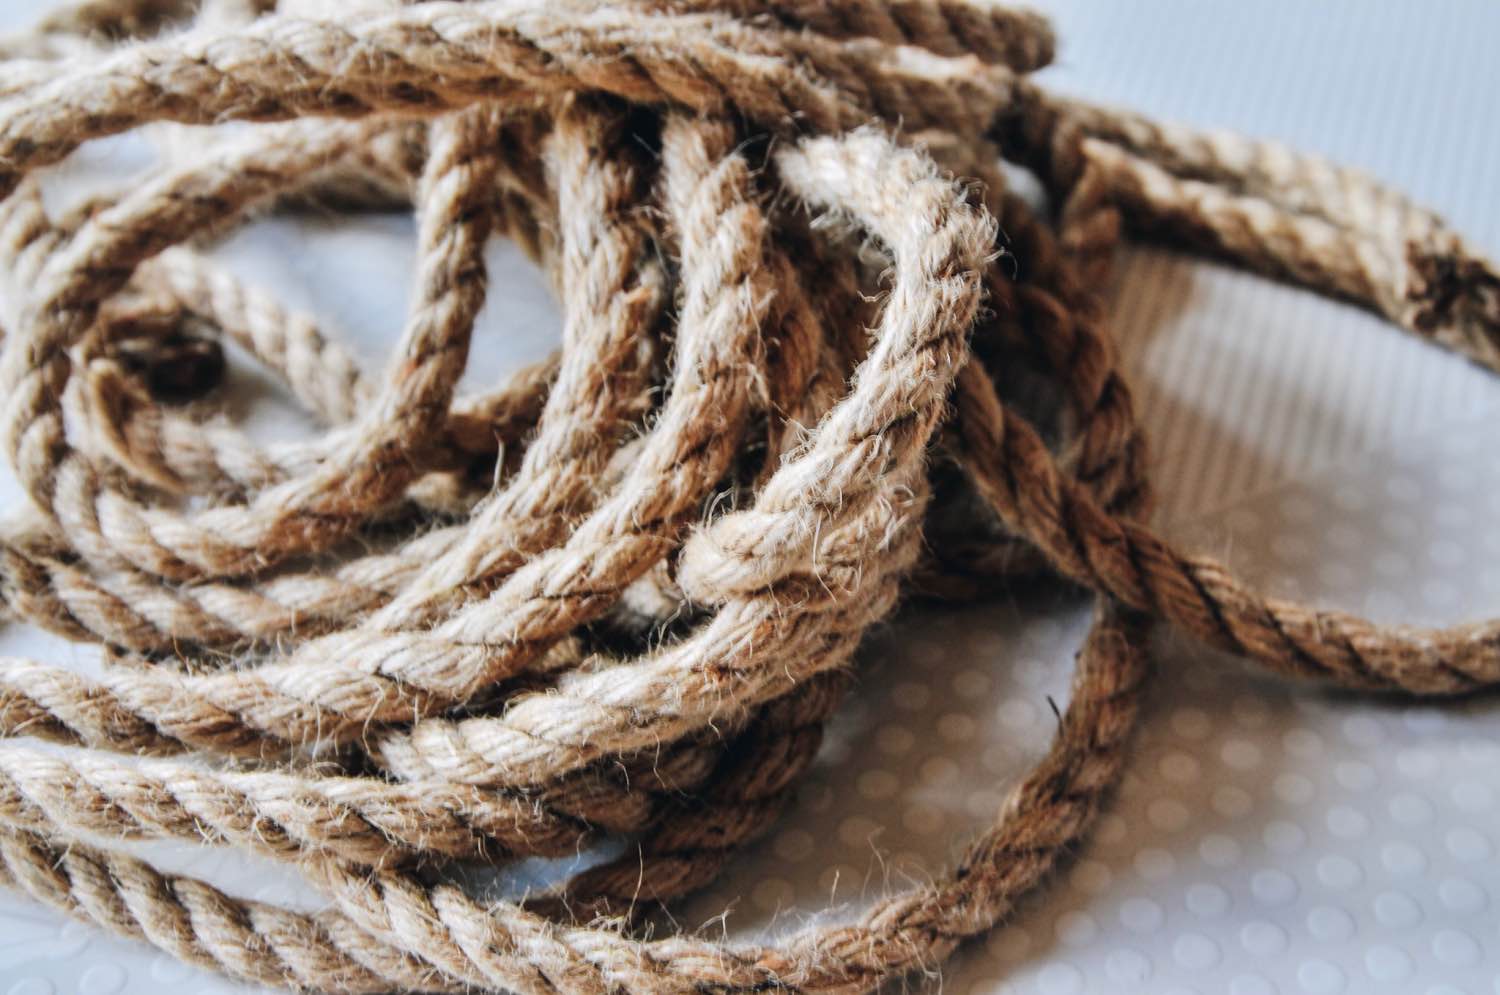 jute rope supplies to make diy rope trivet pop shop america